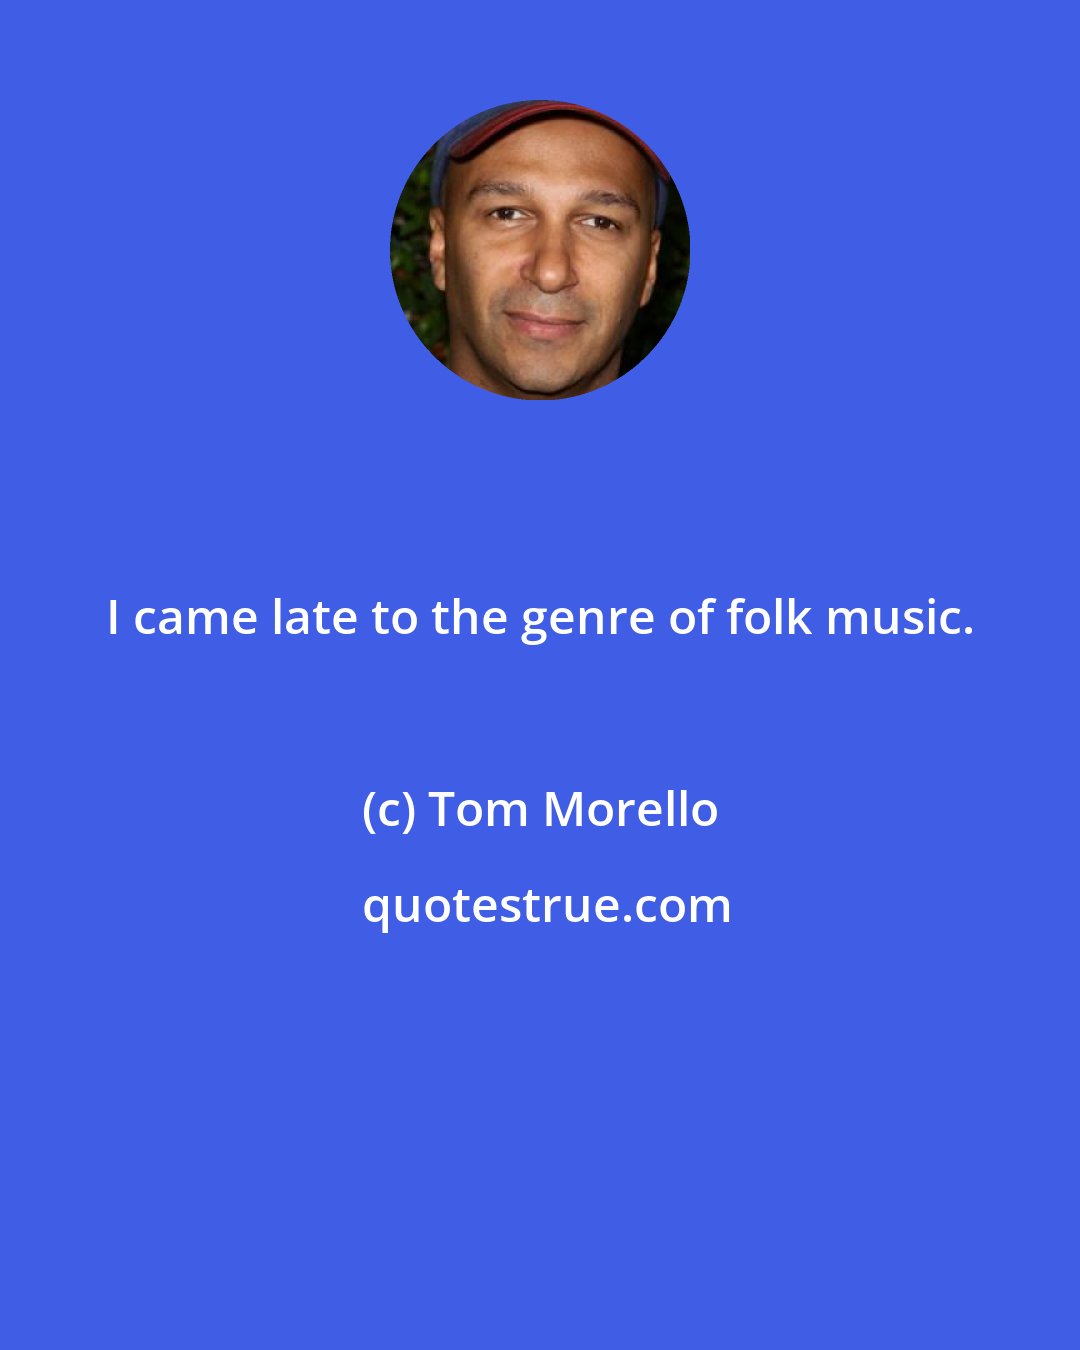 Tom Morello: I came late to the genre of folk music.